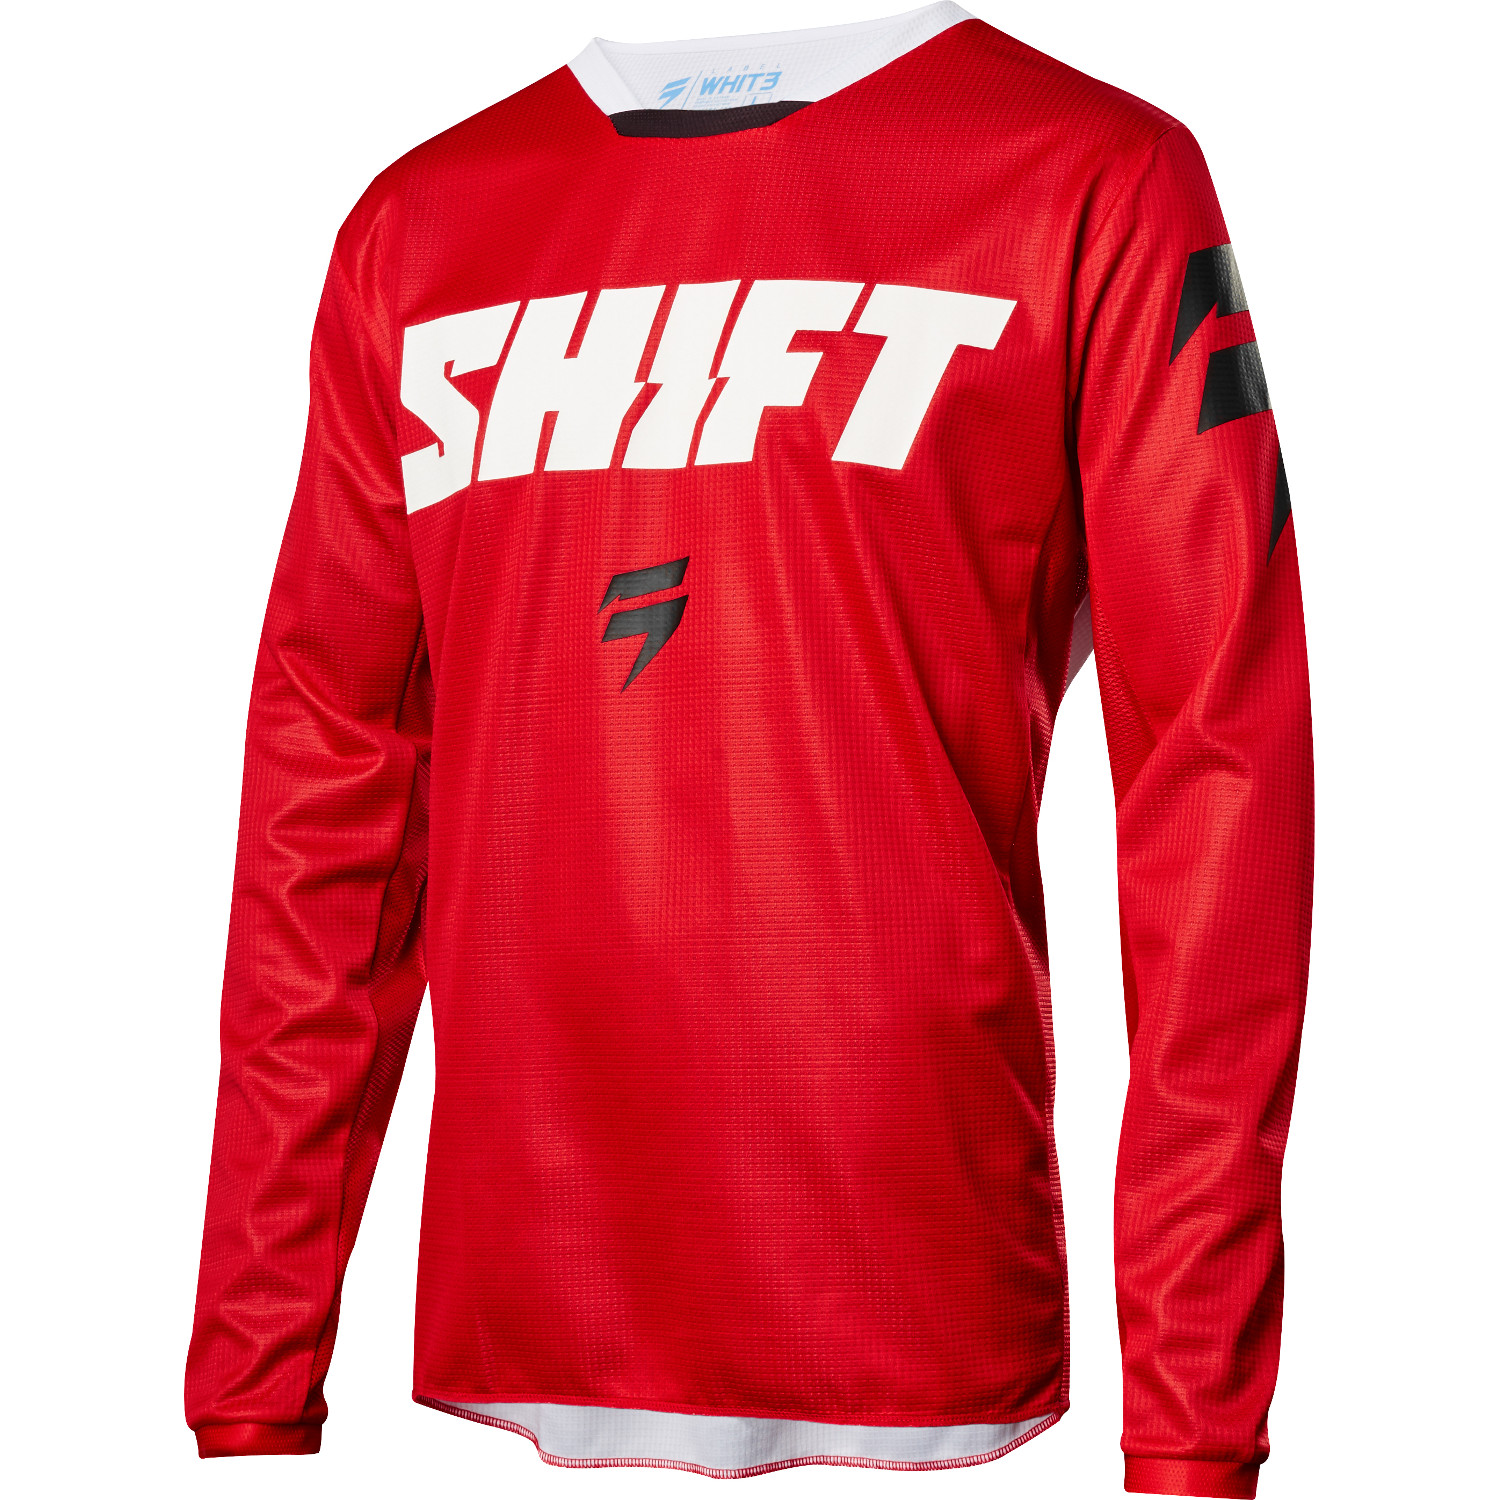 Shift Maglia MX Whit3 Label Ninety Seven - Red